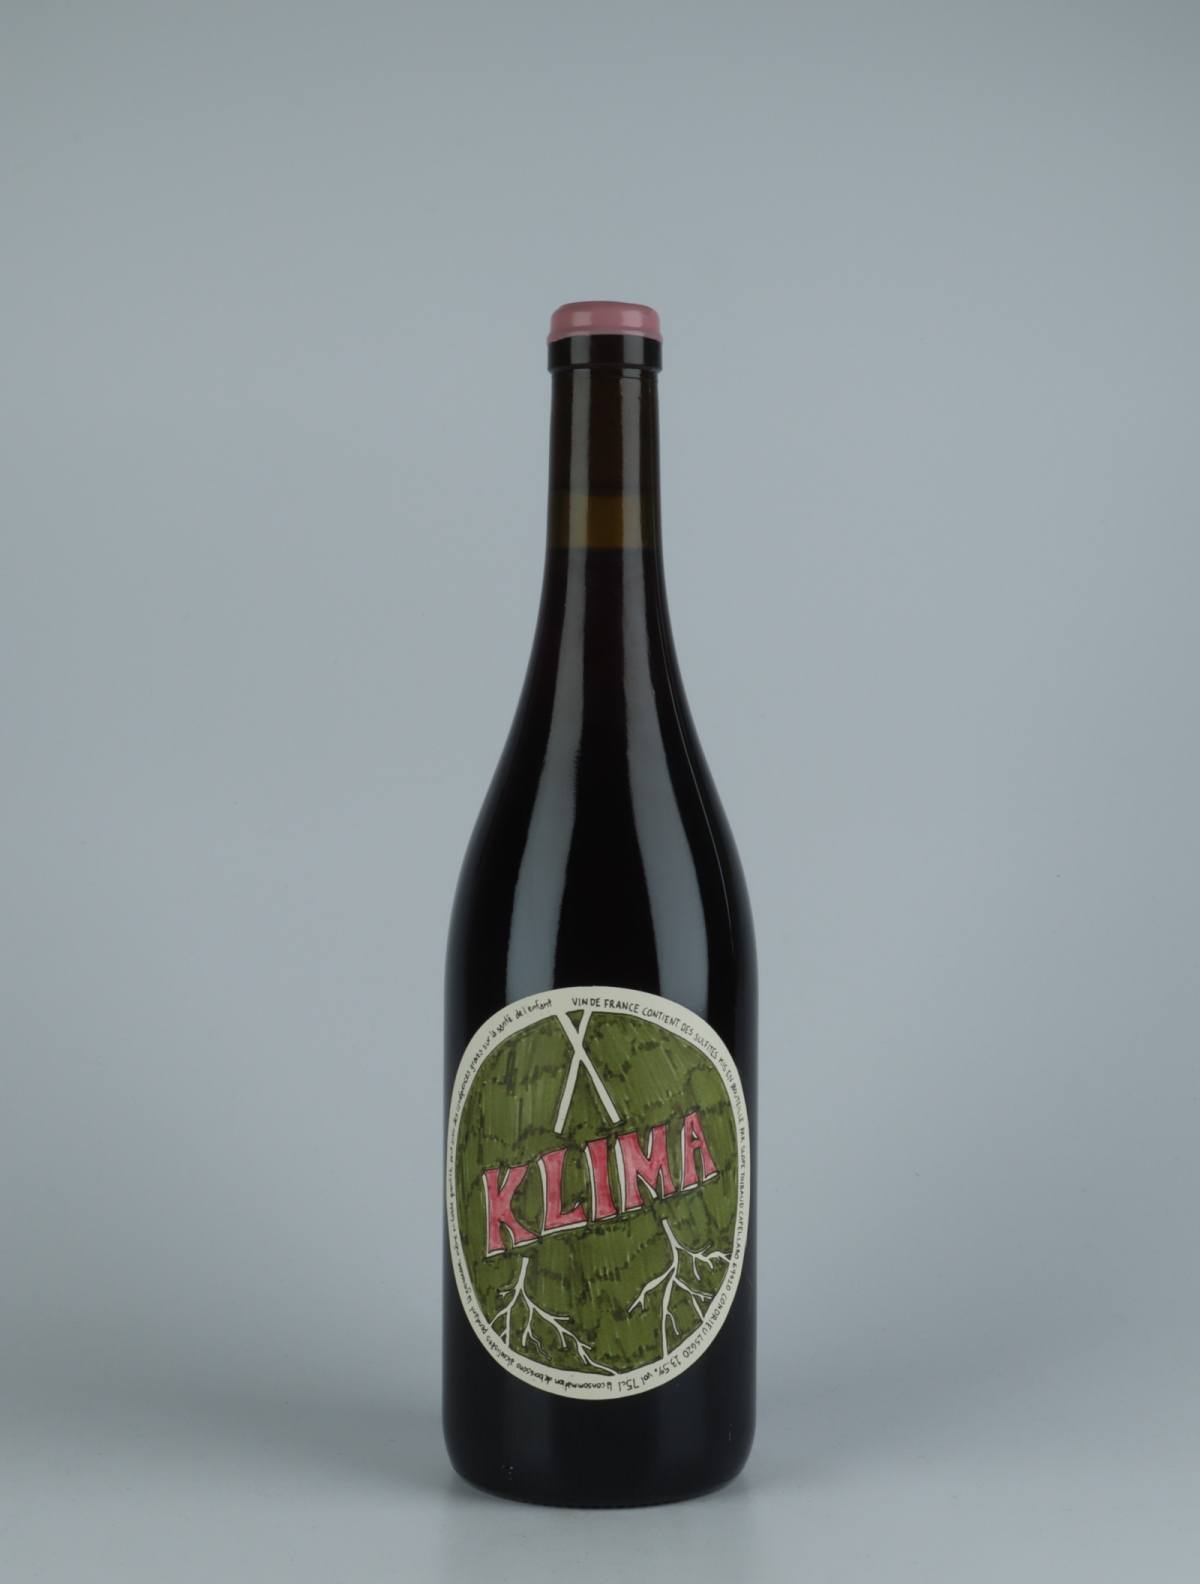 A bottle 2020 Klima Red wine from Slope, Rhône in France